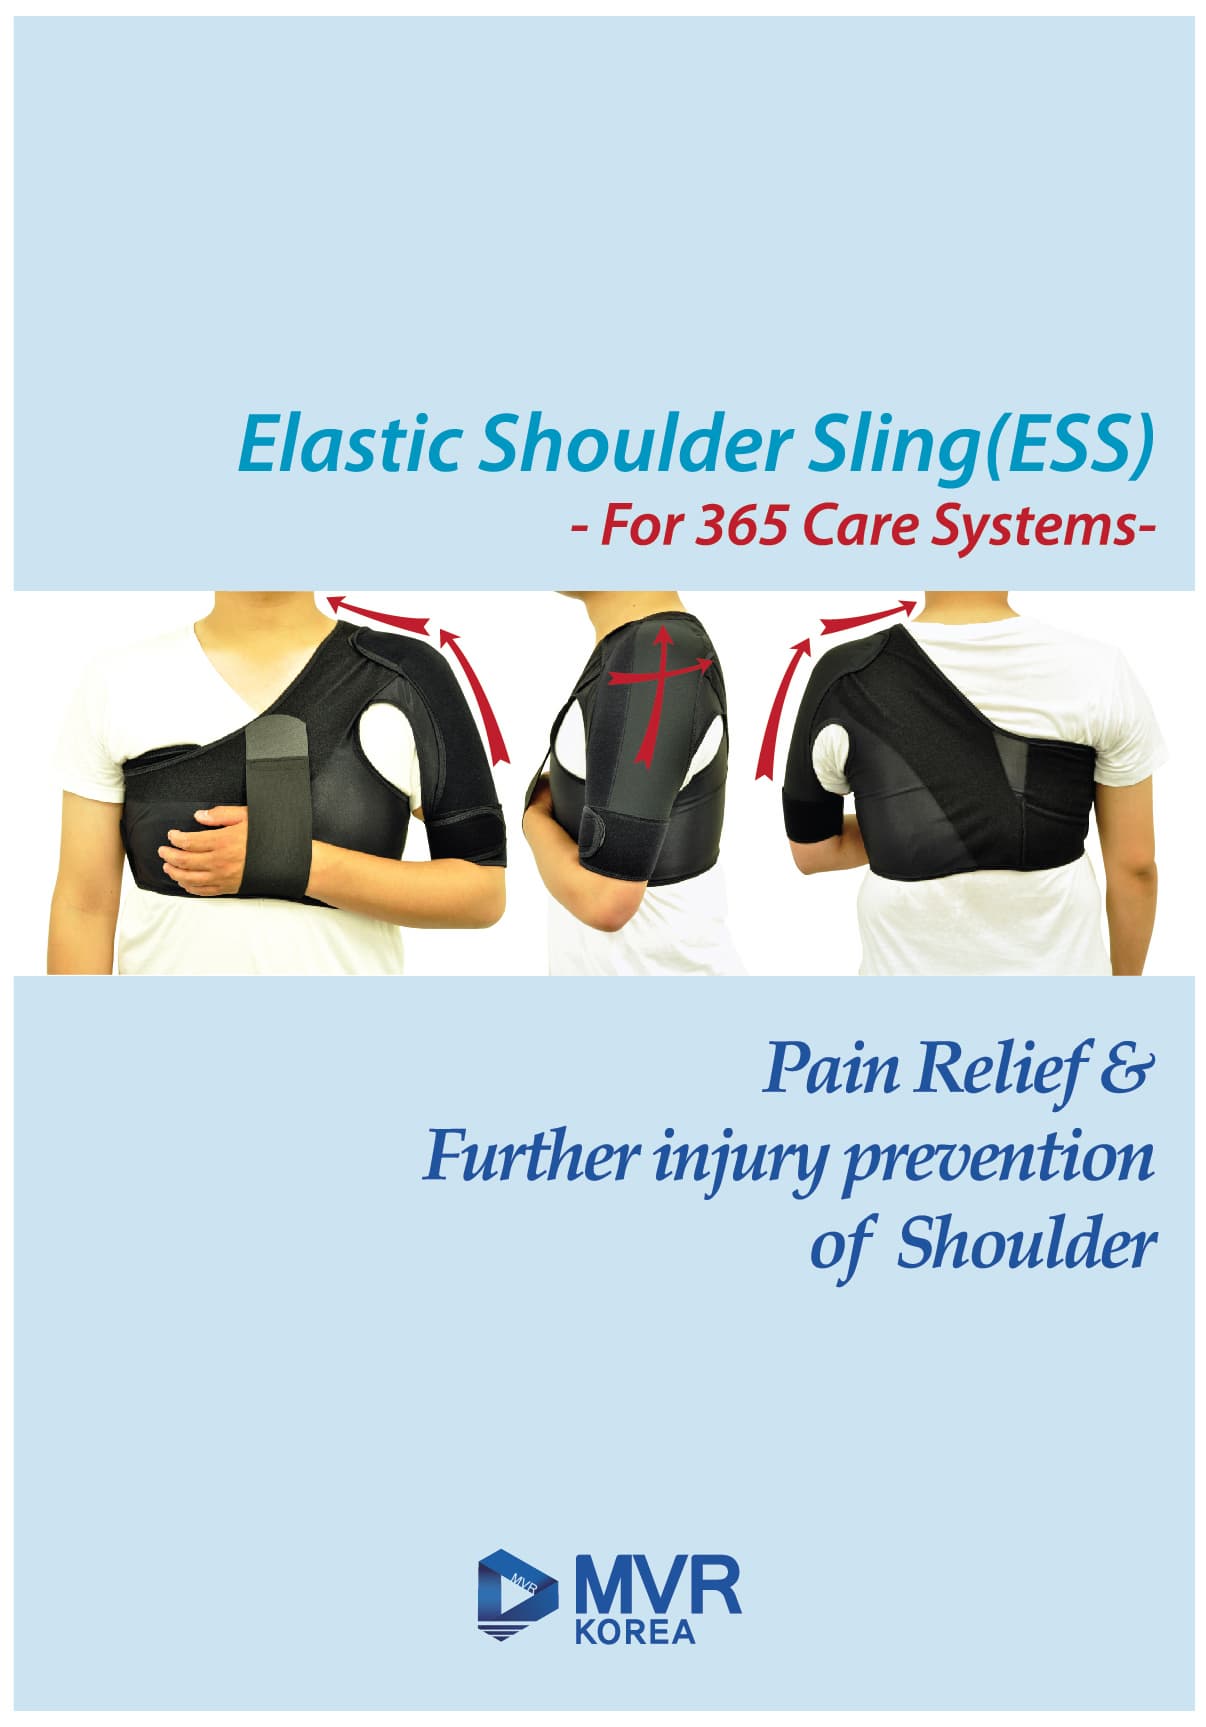 Elastic Shoulder Sling _E_S_S_ for 365 systems